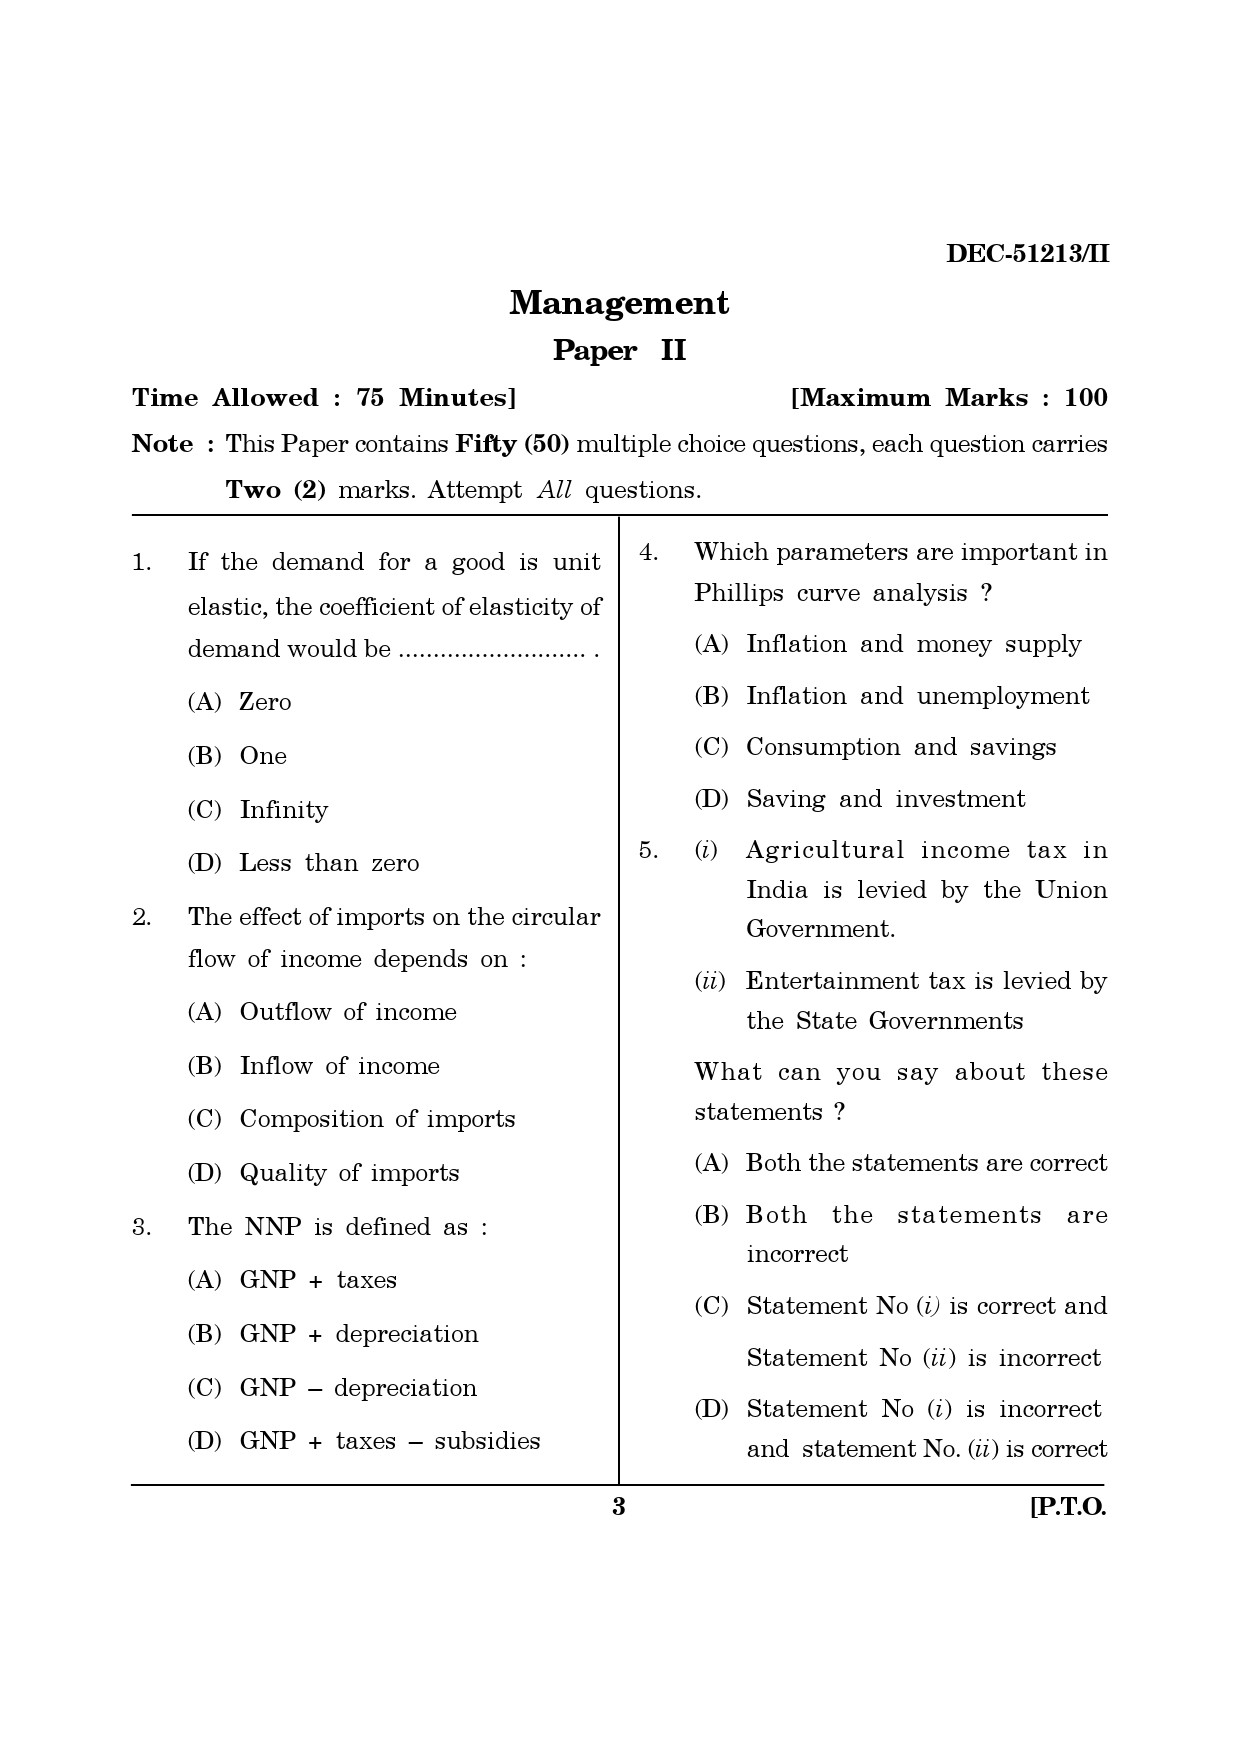 Maharashtra SET Management Question Paper II December 2013 2